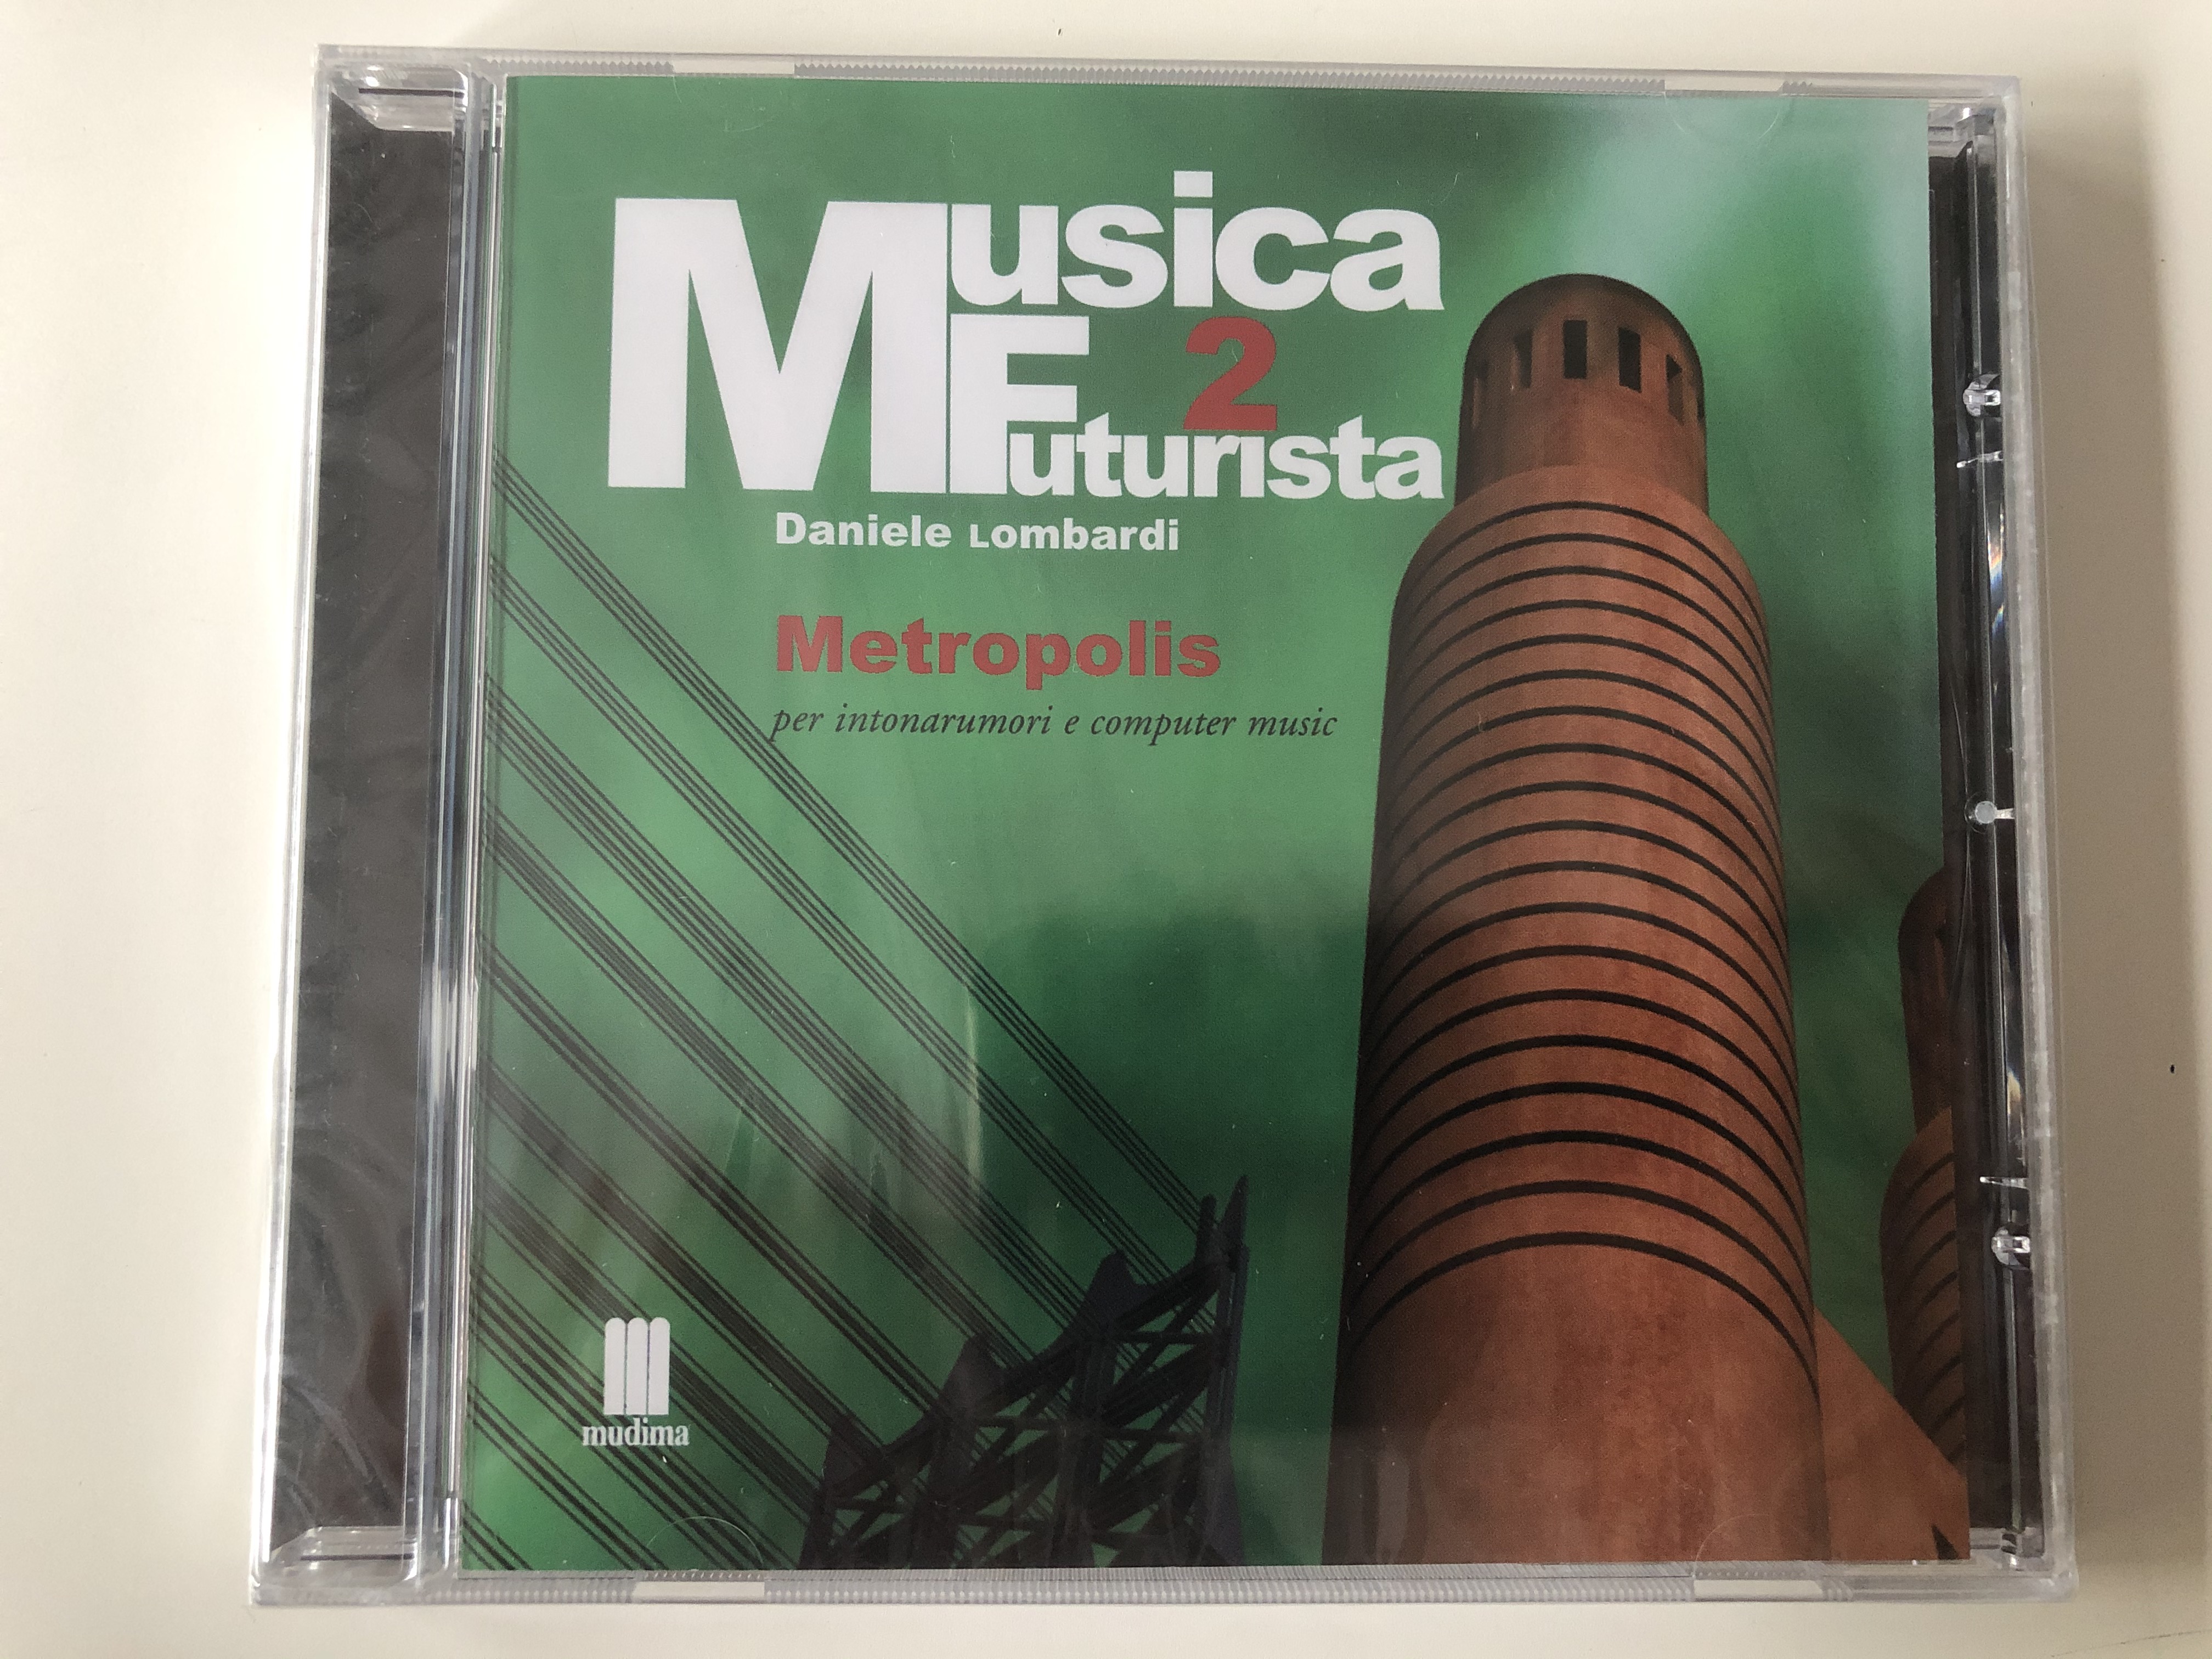 musica-futurista-2-daniele-lombardi-metropolis-per-intonarumori-e-computer-music-mudima-ed.-musicali-audio-cd-2010-8033224410272-1-.jpg